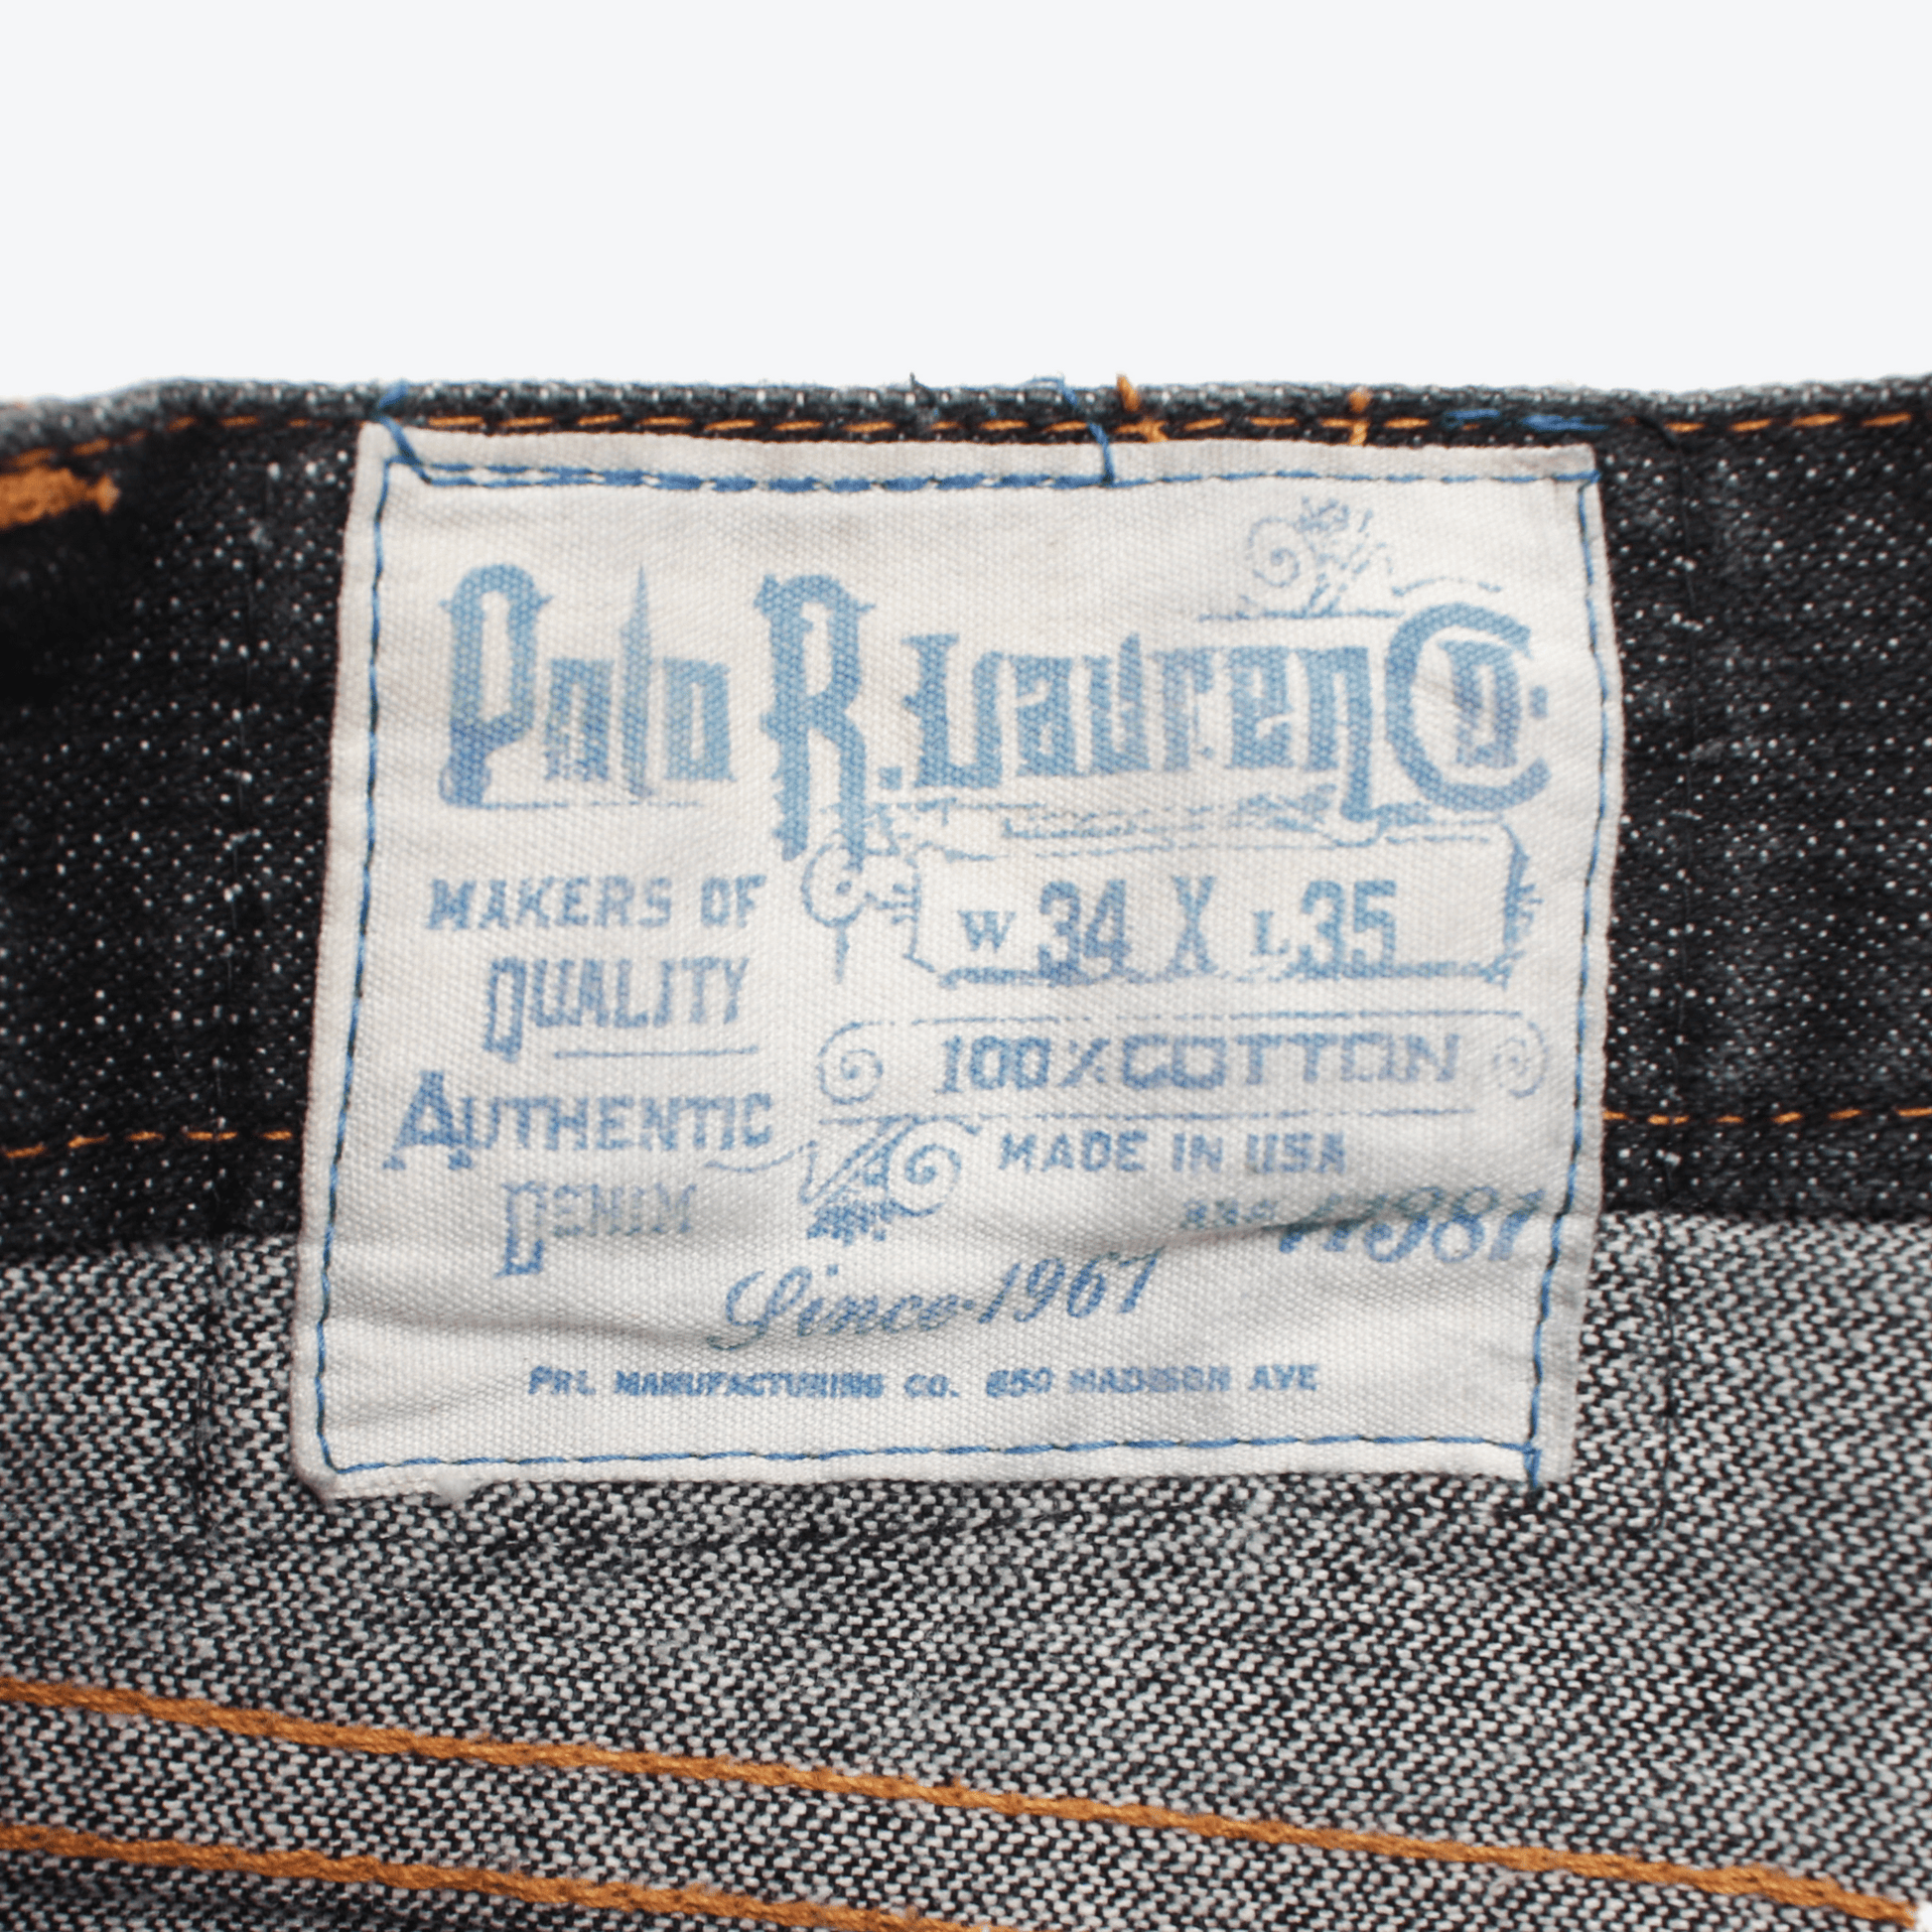 Vintage Black Jeans - 34x35 - American Madness